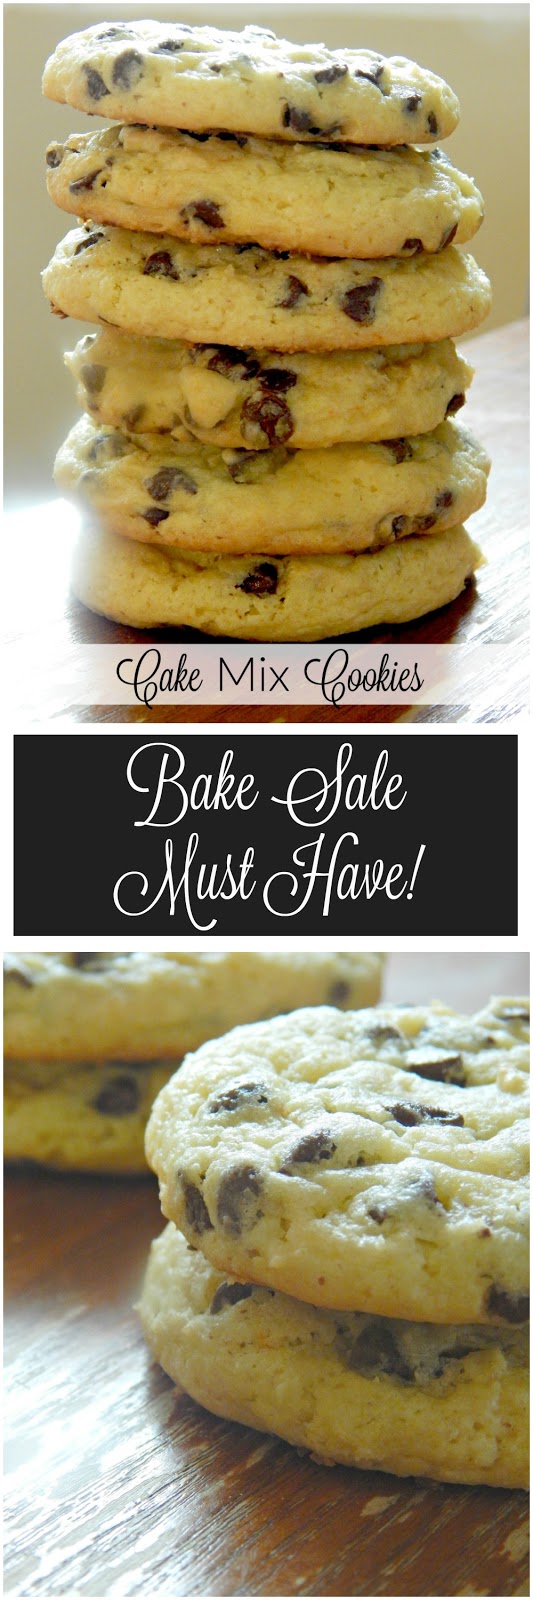 cake mix cookies (sweetandsavoryfood.com)